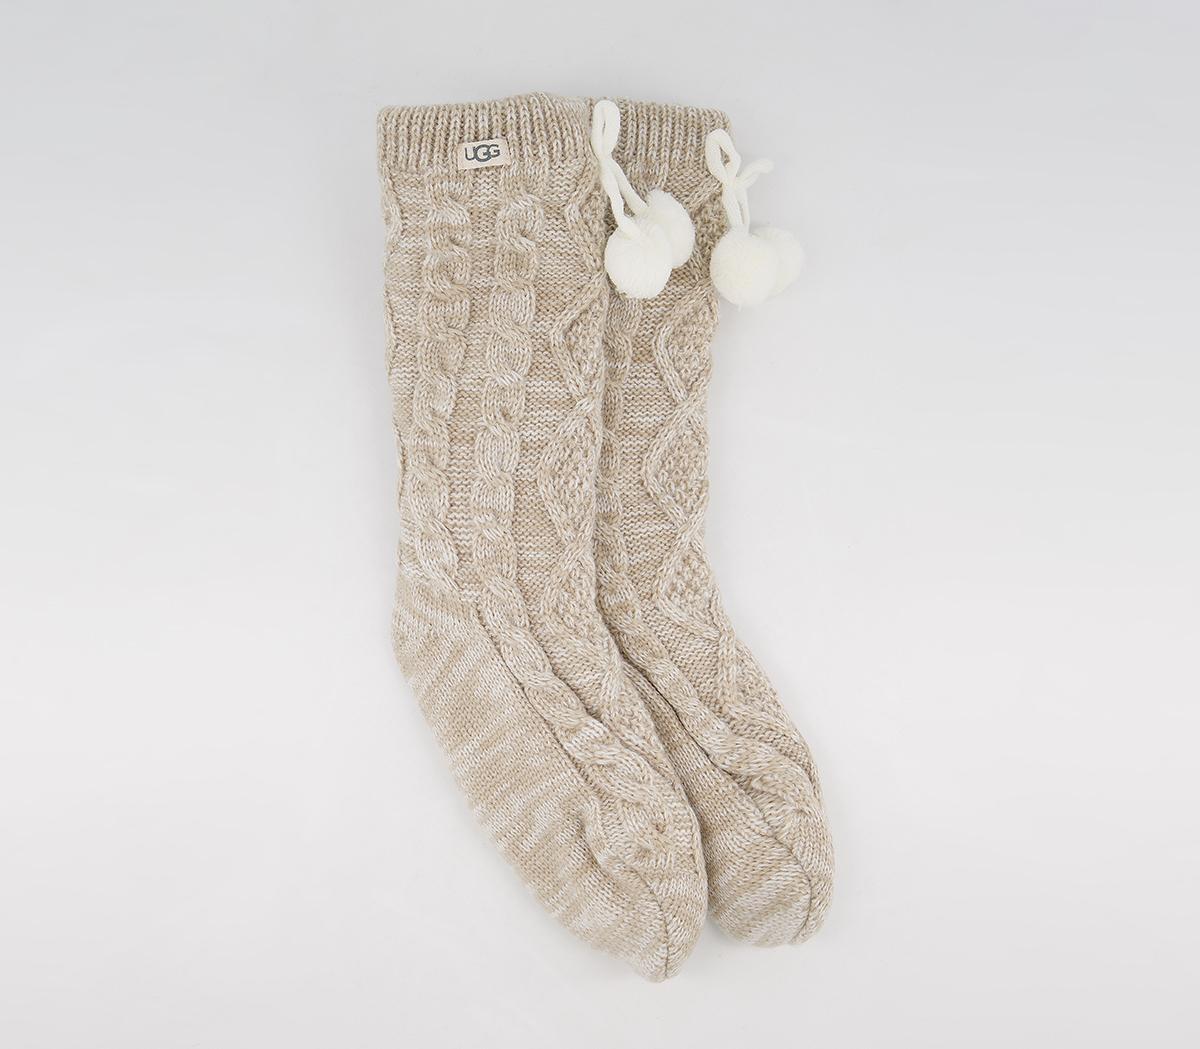 UGG Pom Pom Fleece Cream - Socks Accessories Lined